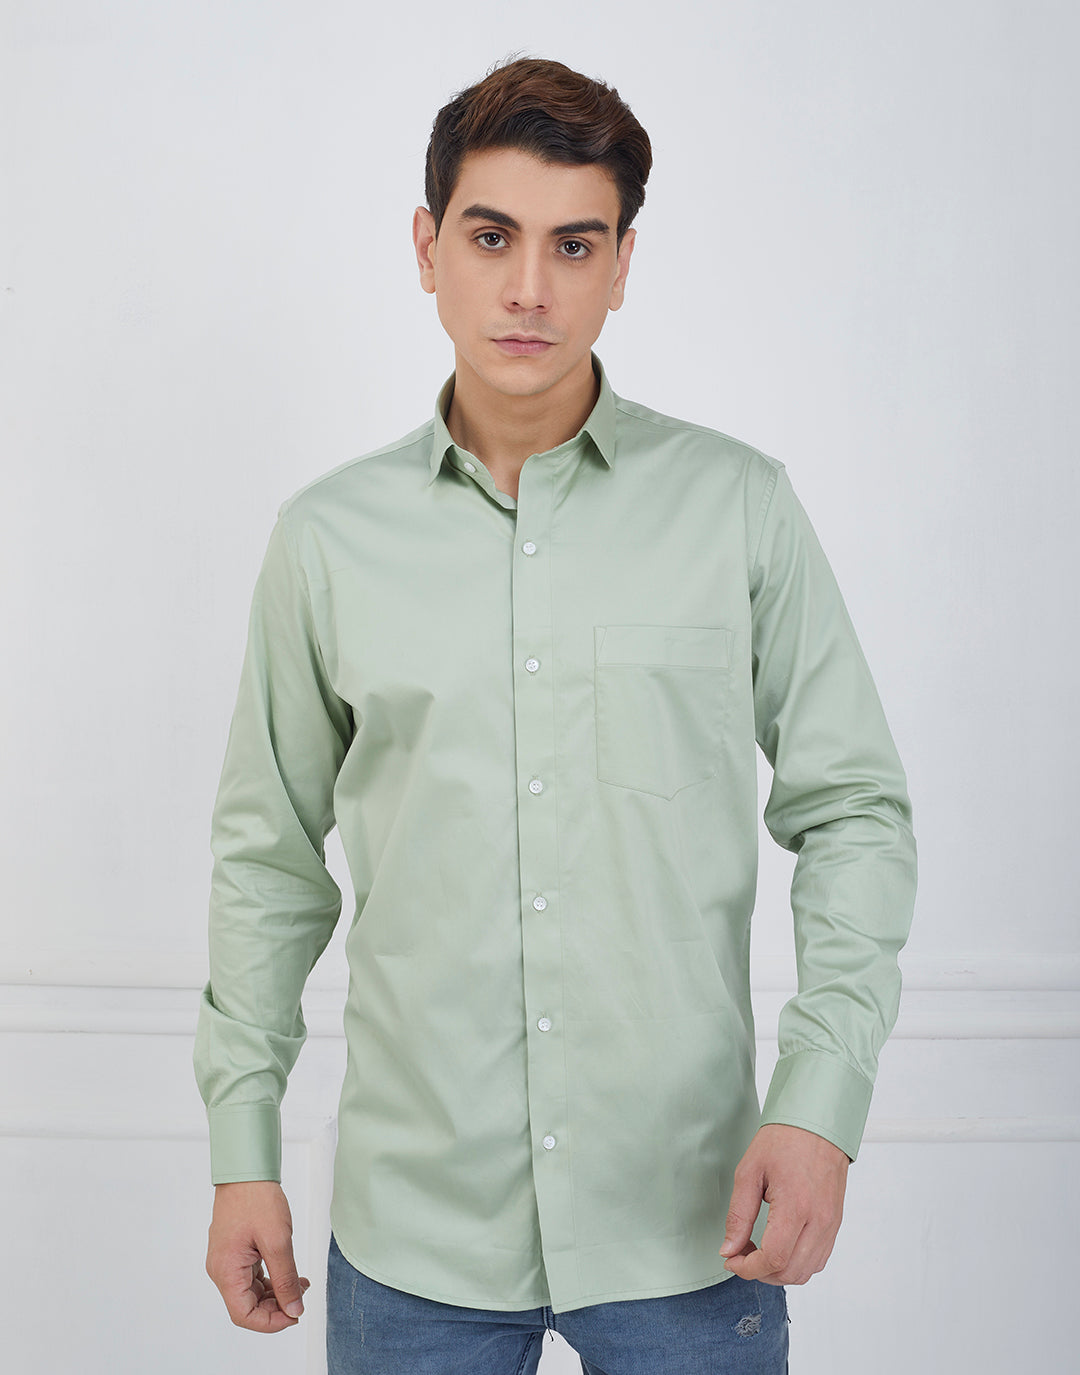 Glacial Green Color Shirt